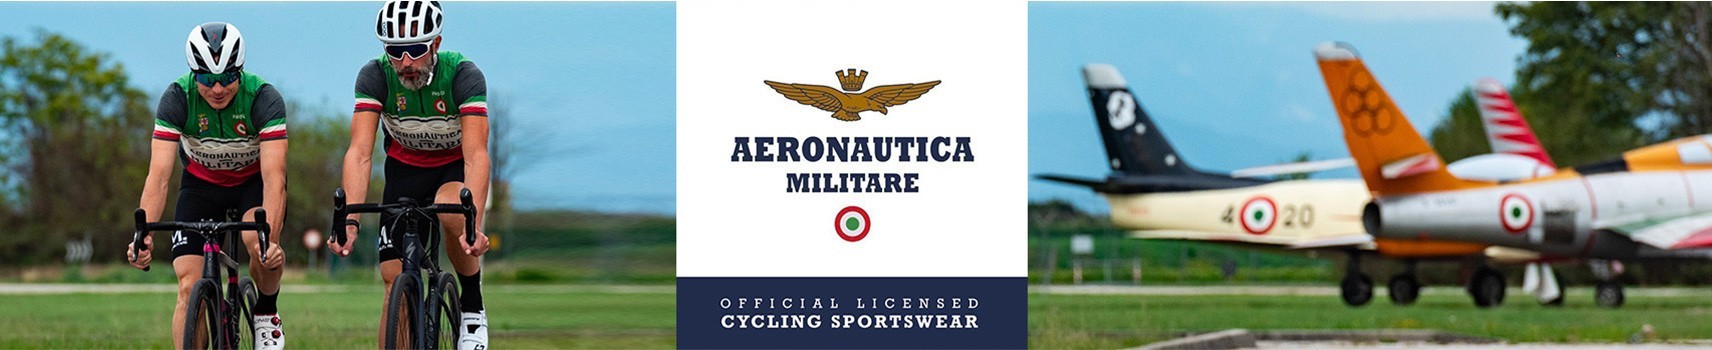 Les tenues officielles de l'armée de l'air Italienne